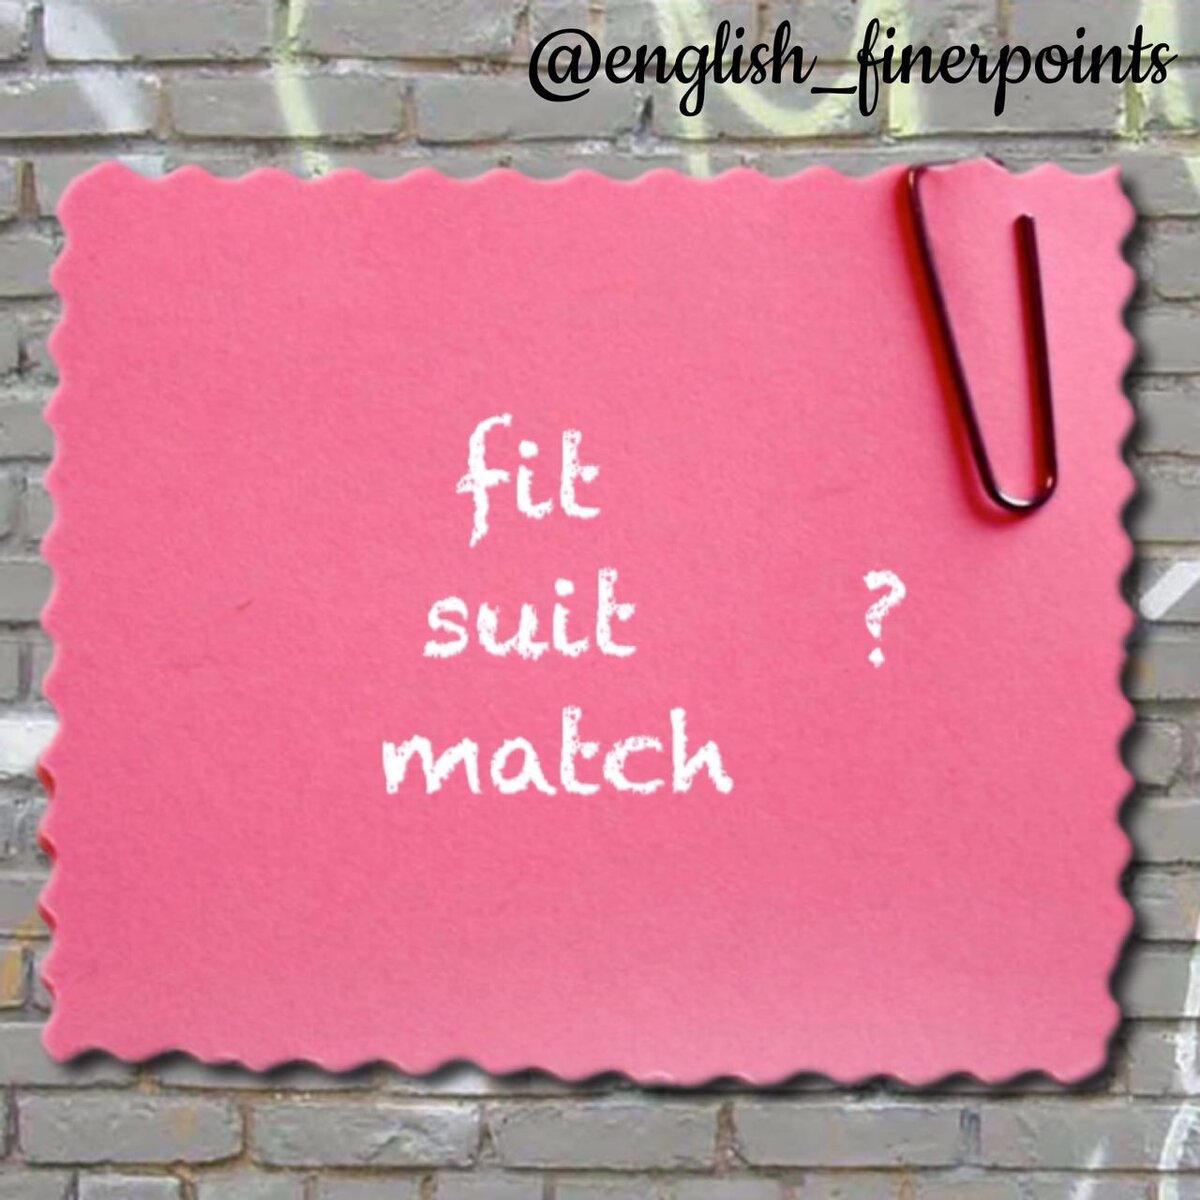 Match fit разница